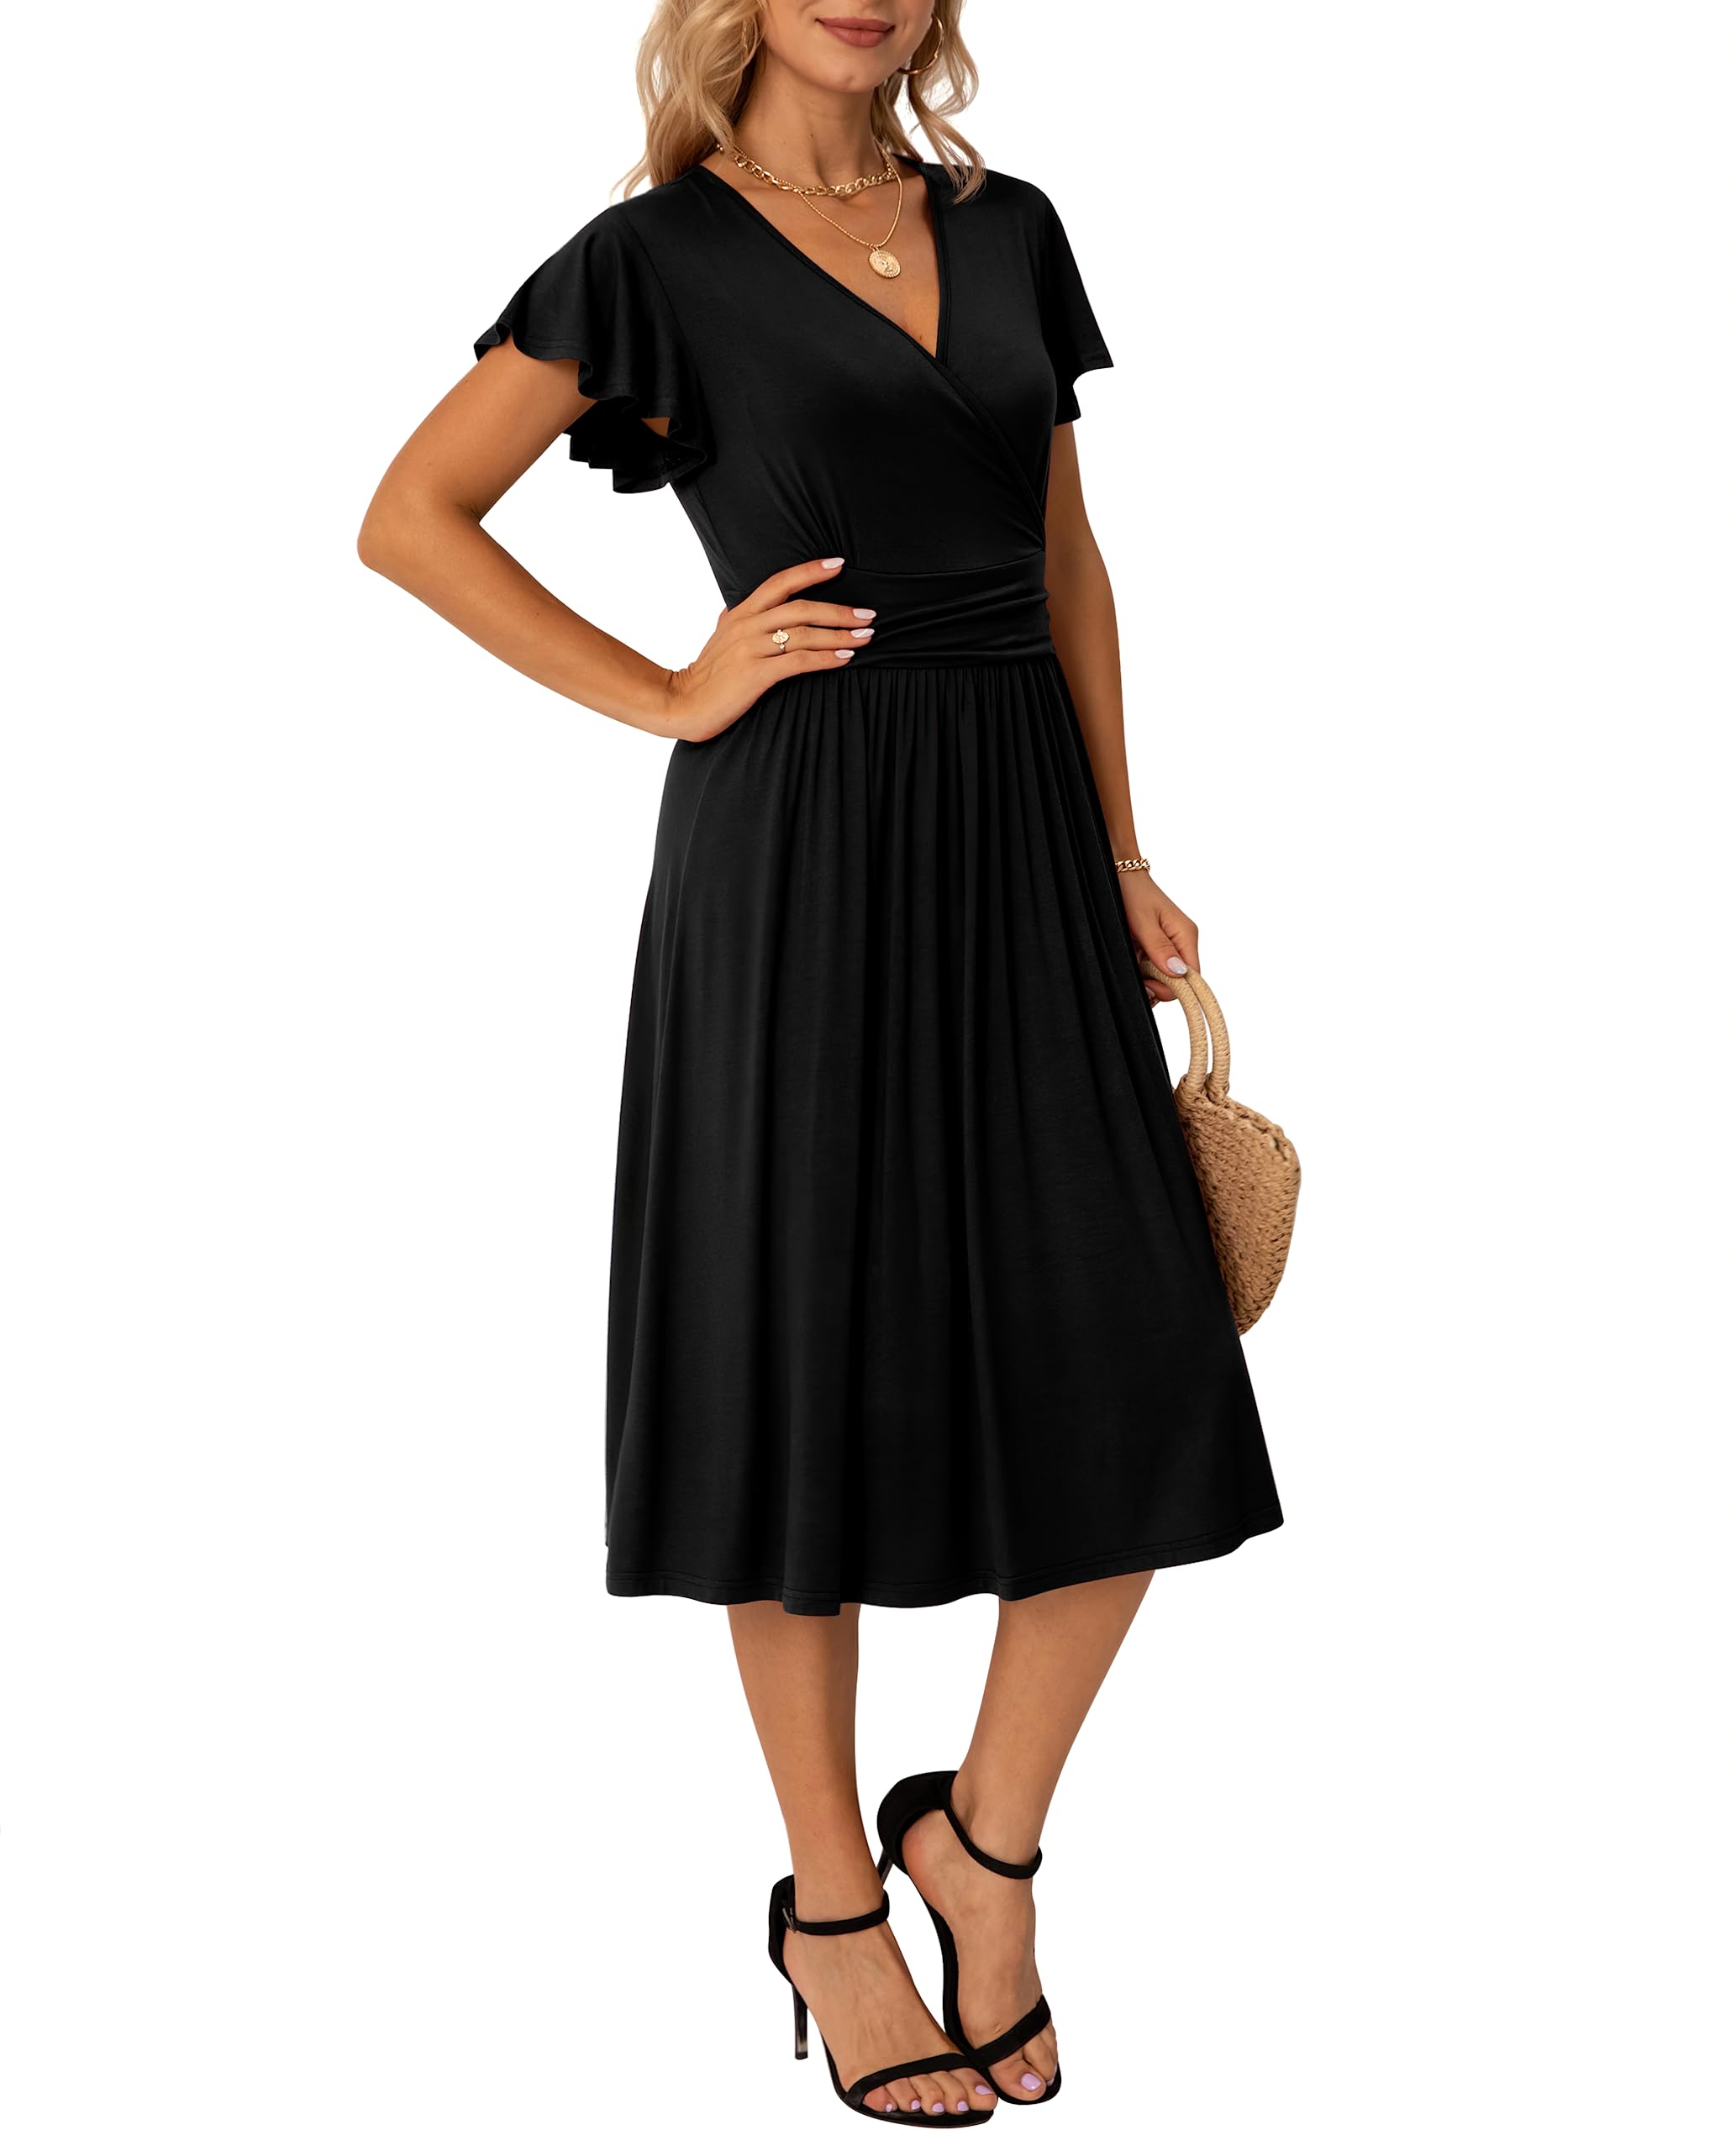 GRECERELLE Spring Summer Dress for Women Casual Ruffle Short/Long Sleeve Dresses, Wrap V-Neck Dress